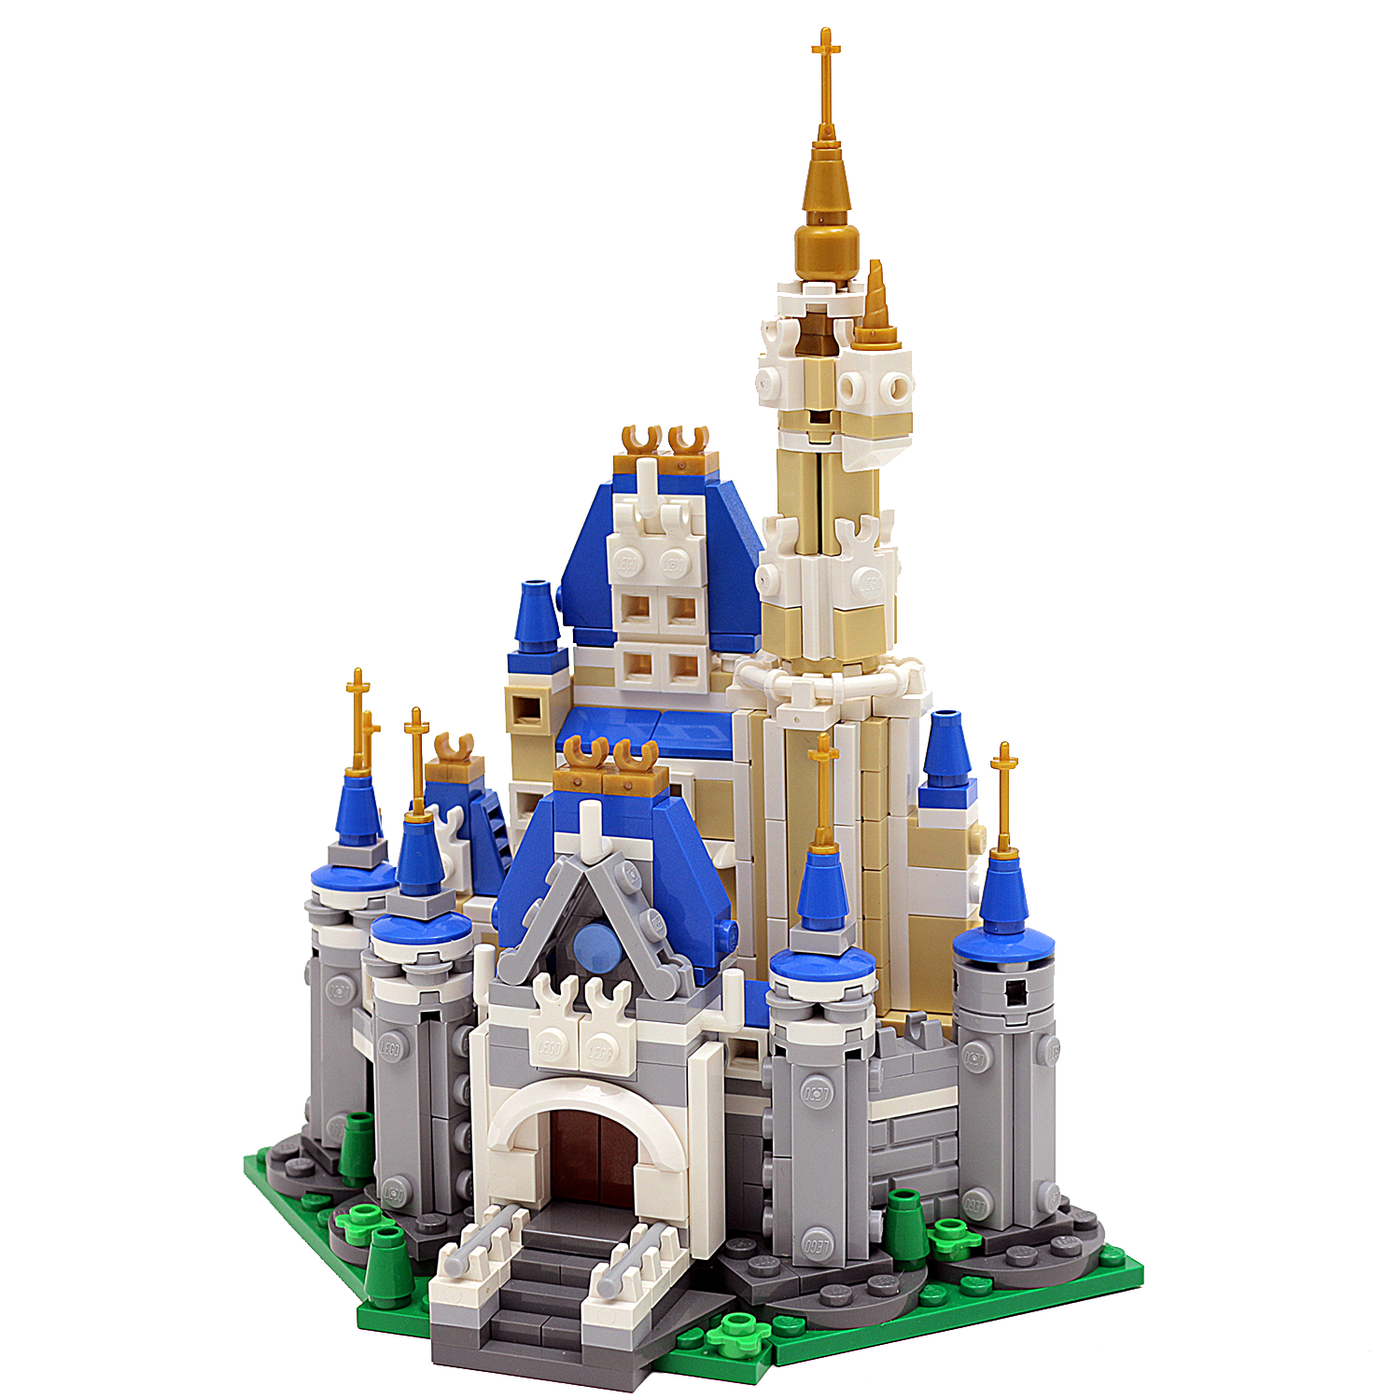 Mini Custom LEGO Disney Cinderellas Castle Instructions, Parts